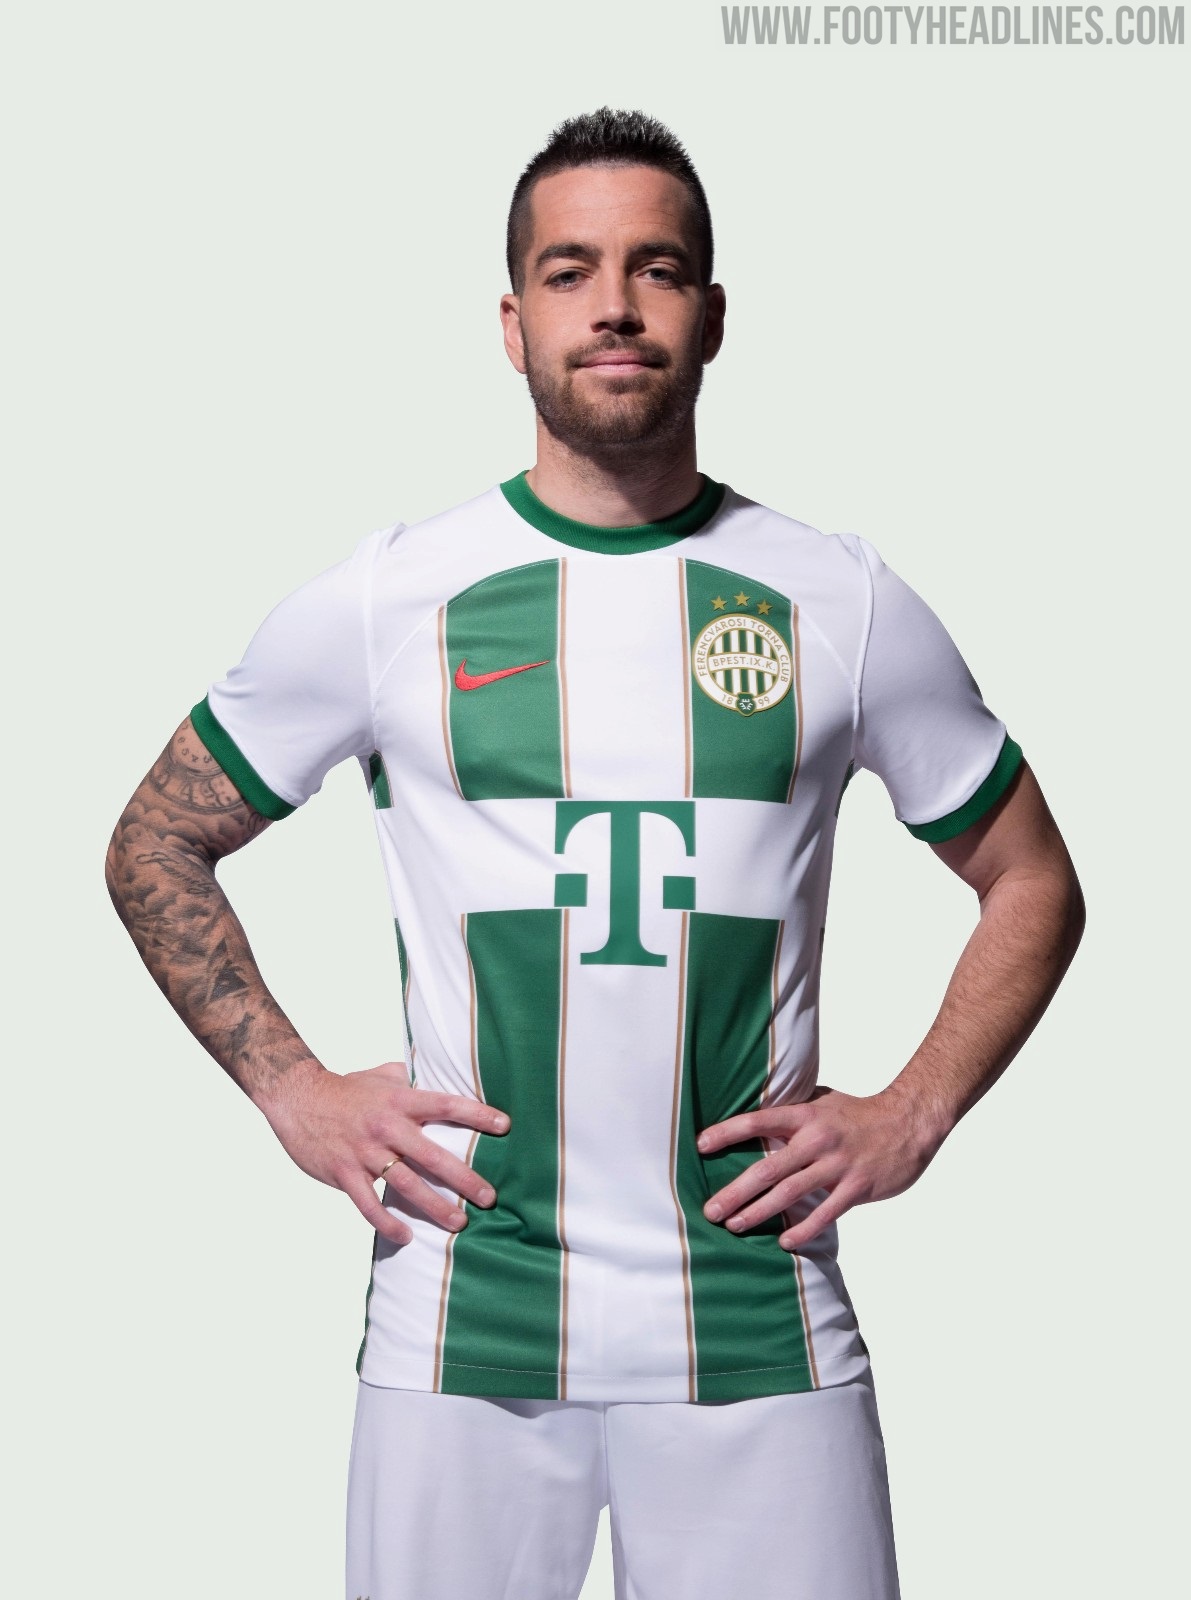 Ferencvaros 23-24 Home Kit Released - Footy Headlines